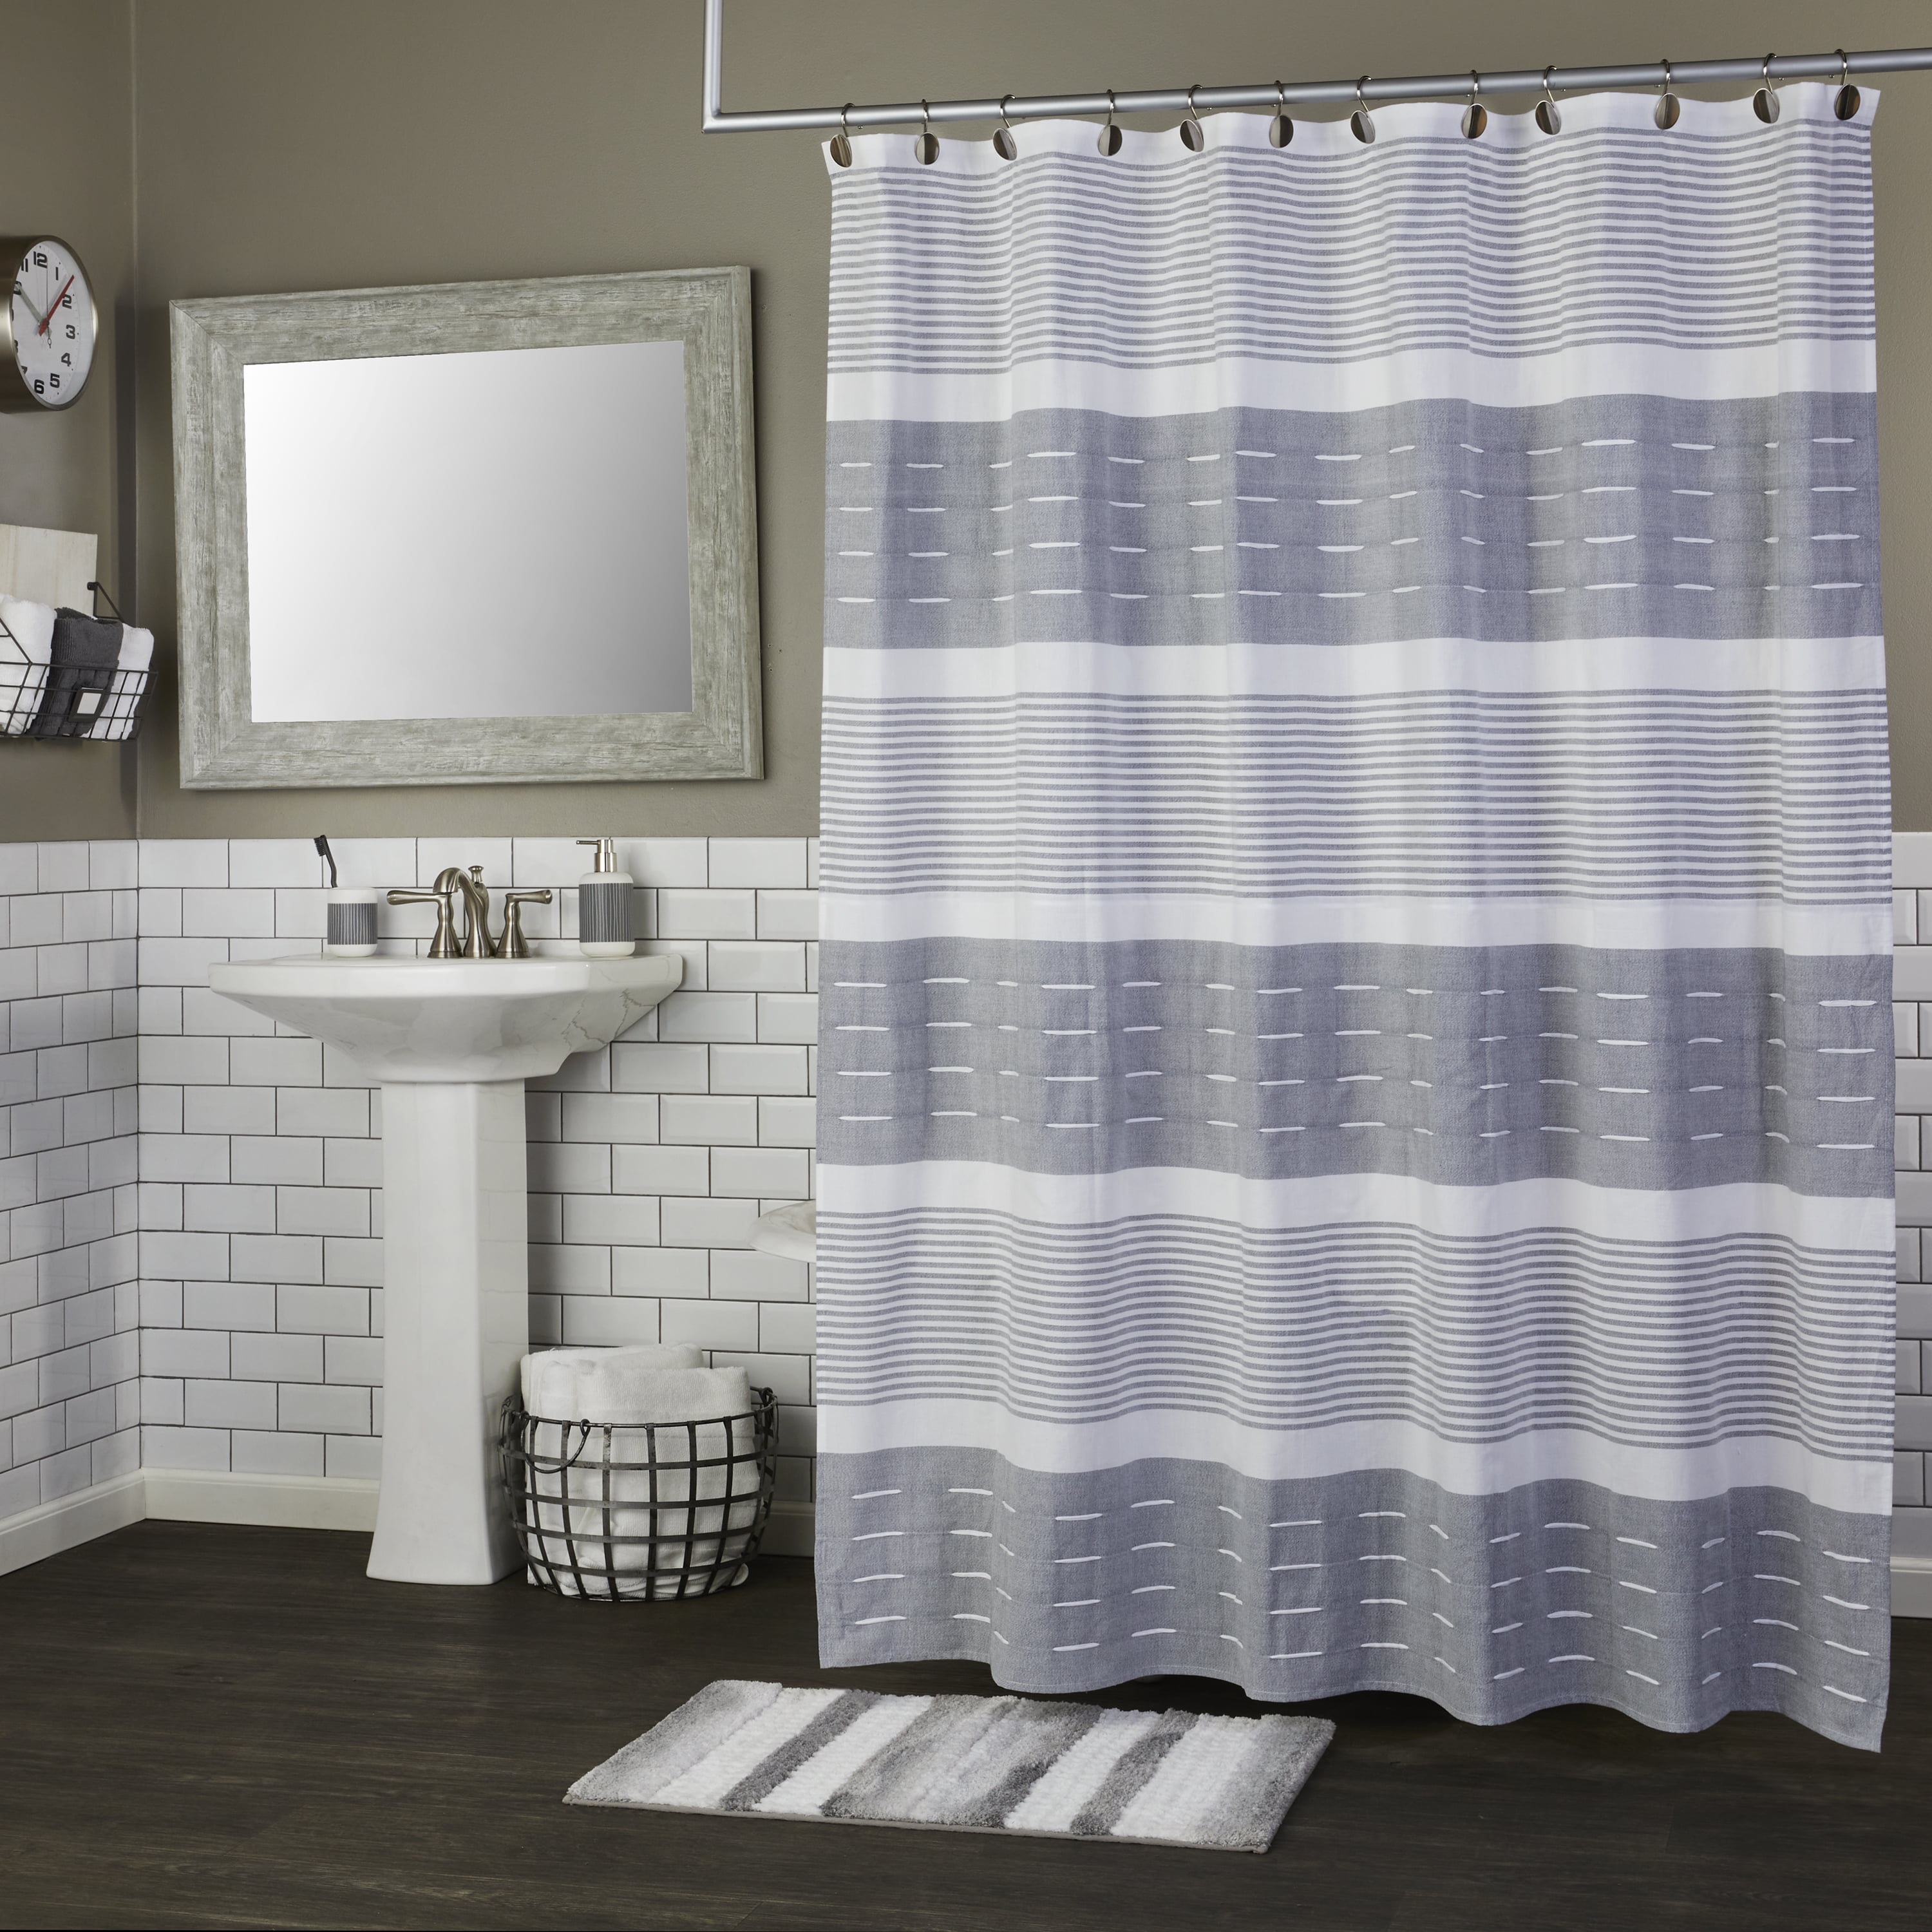 The Cherry Blossom Lin Waterproof Fabric Home Decor Shower Curtain Bathroom Mat 